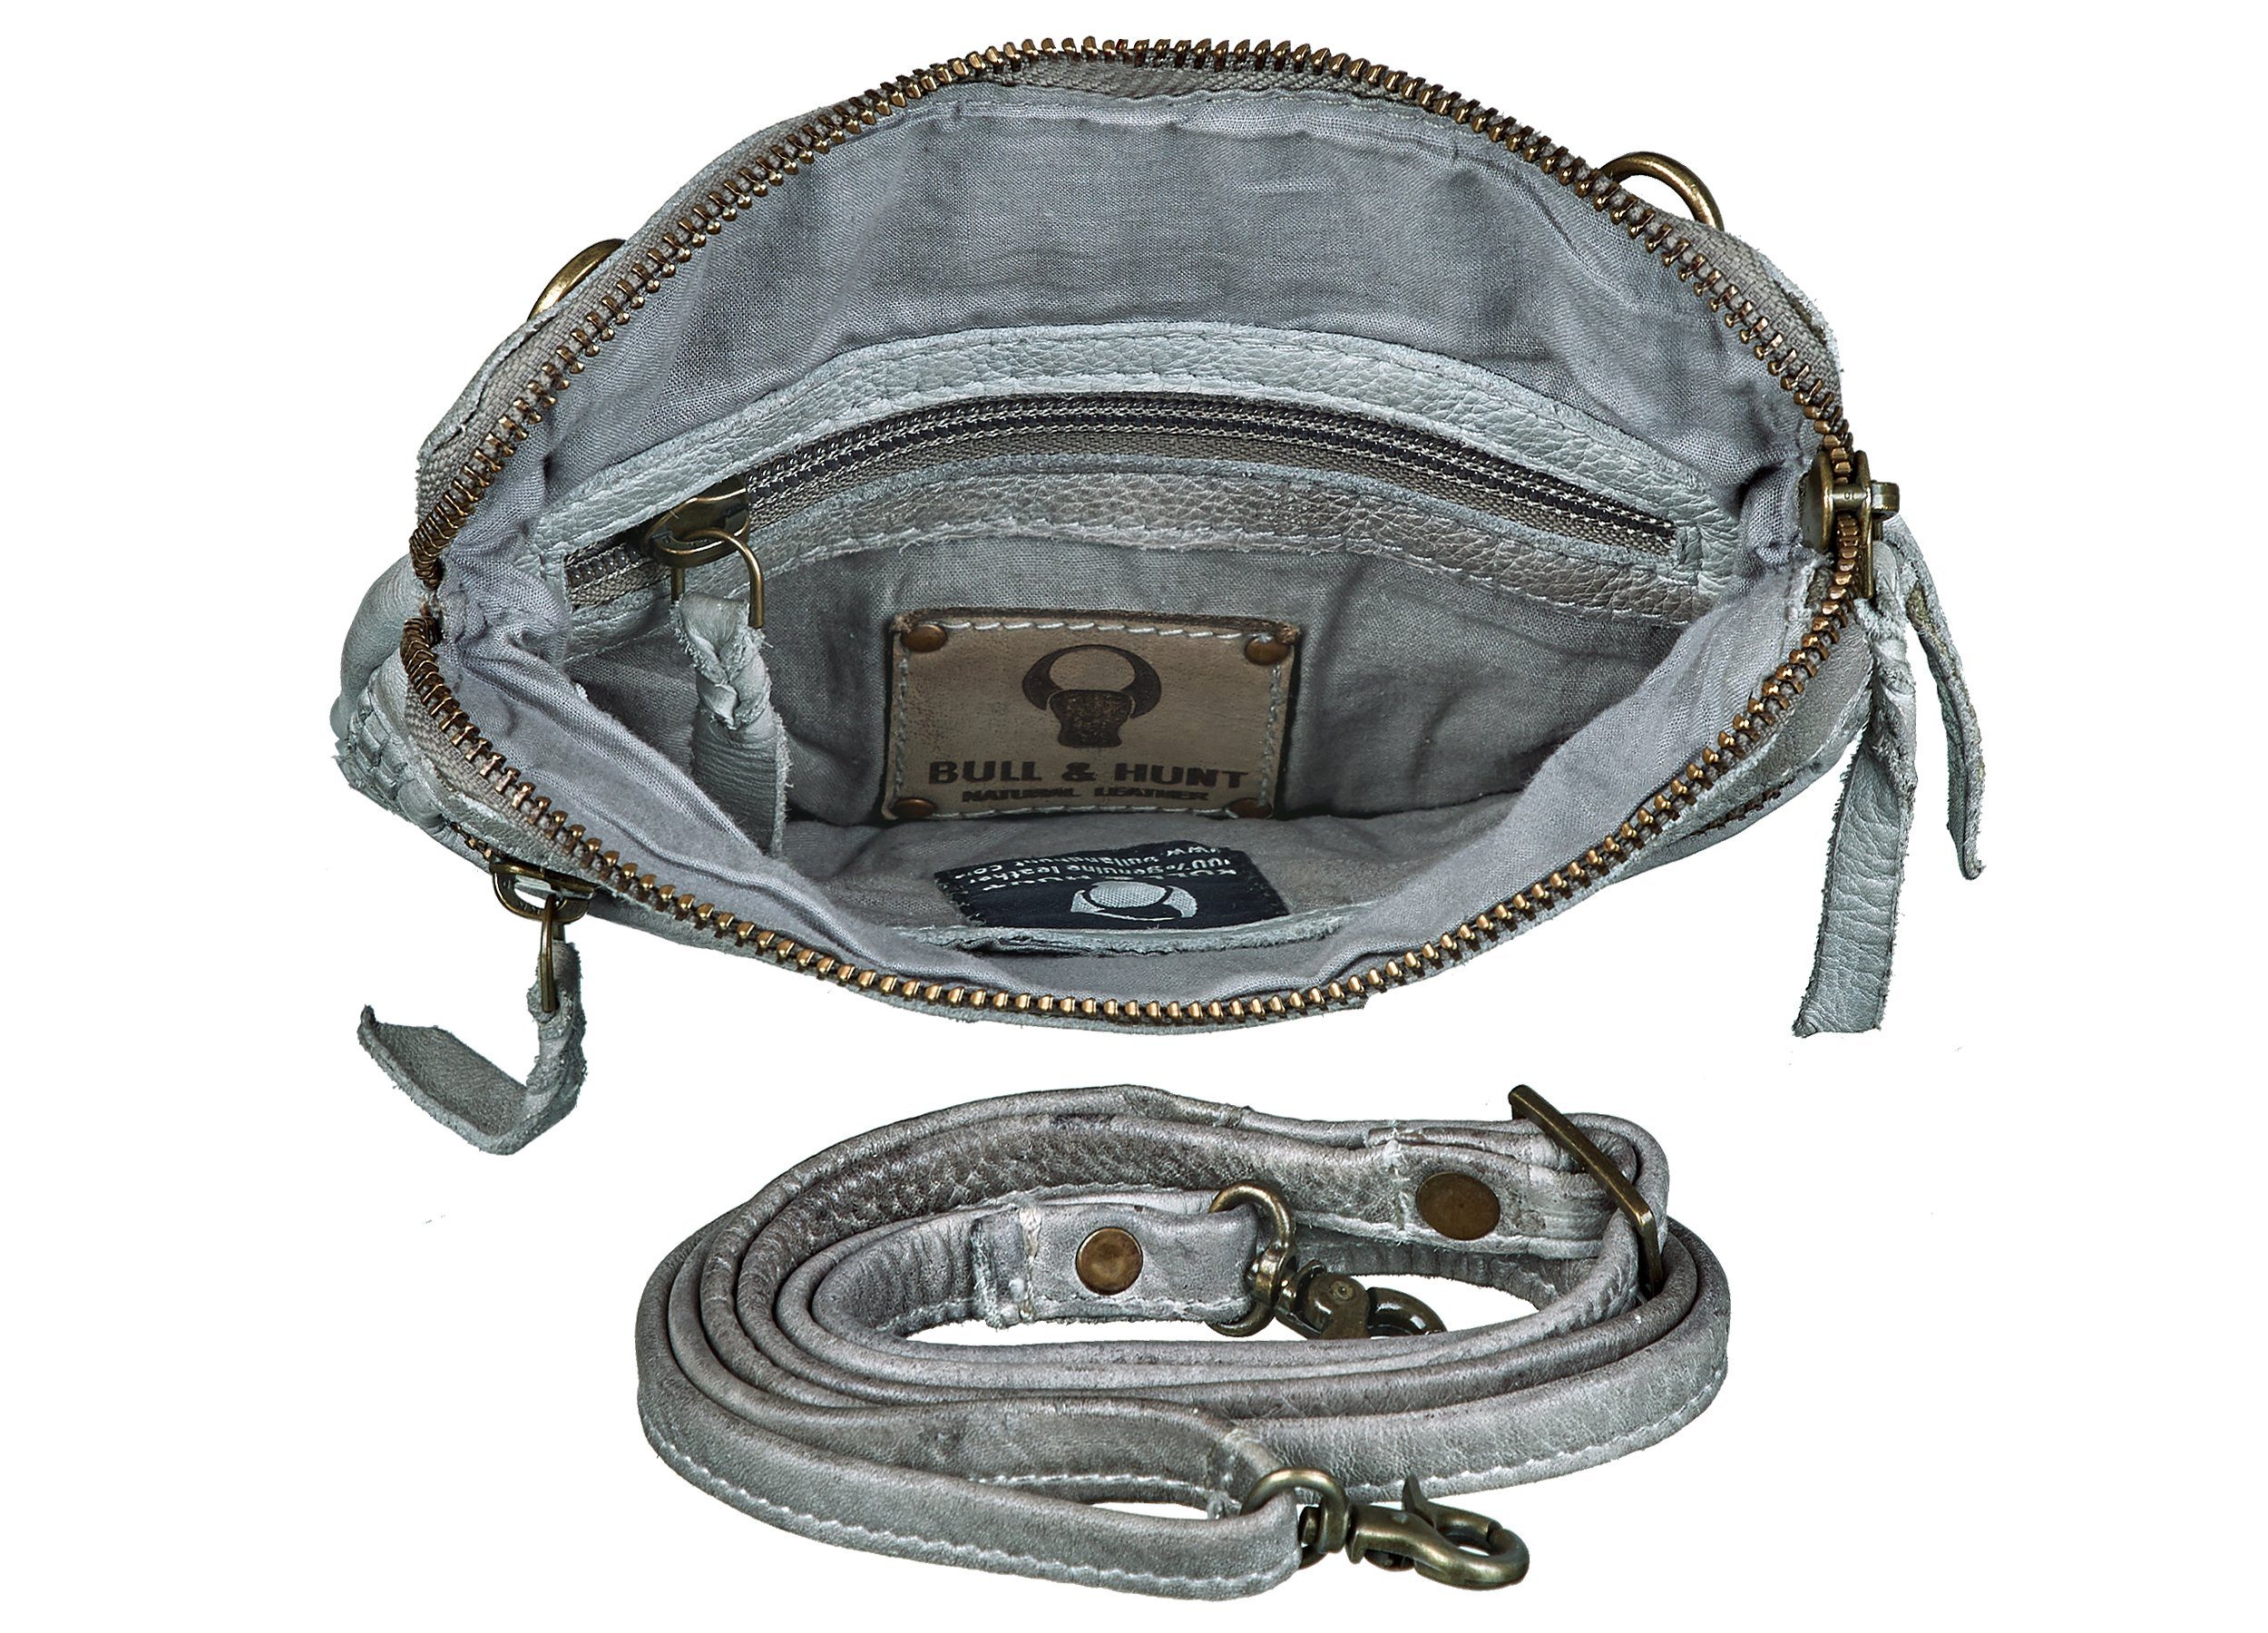 Bull Mini geflochten Hunt grey minibag, Bag & braided